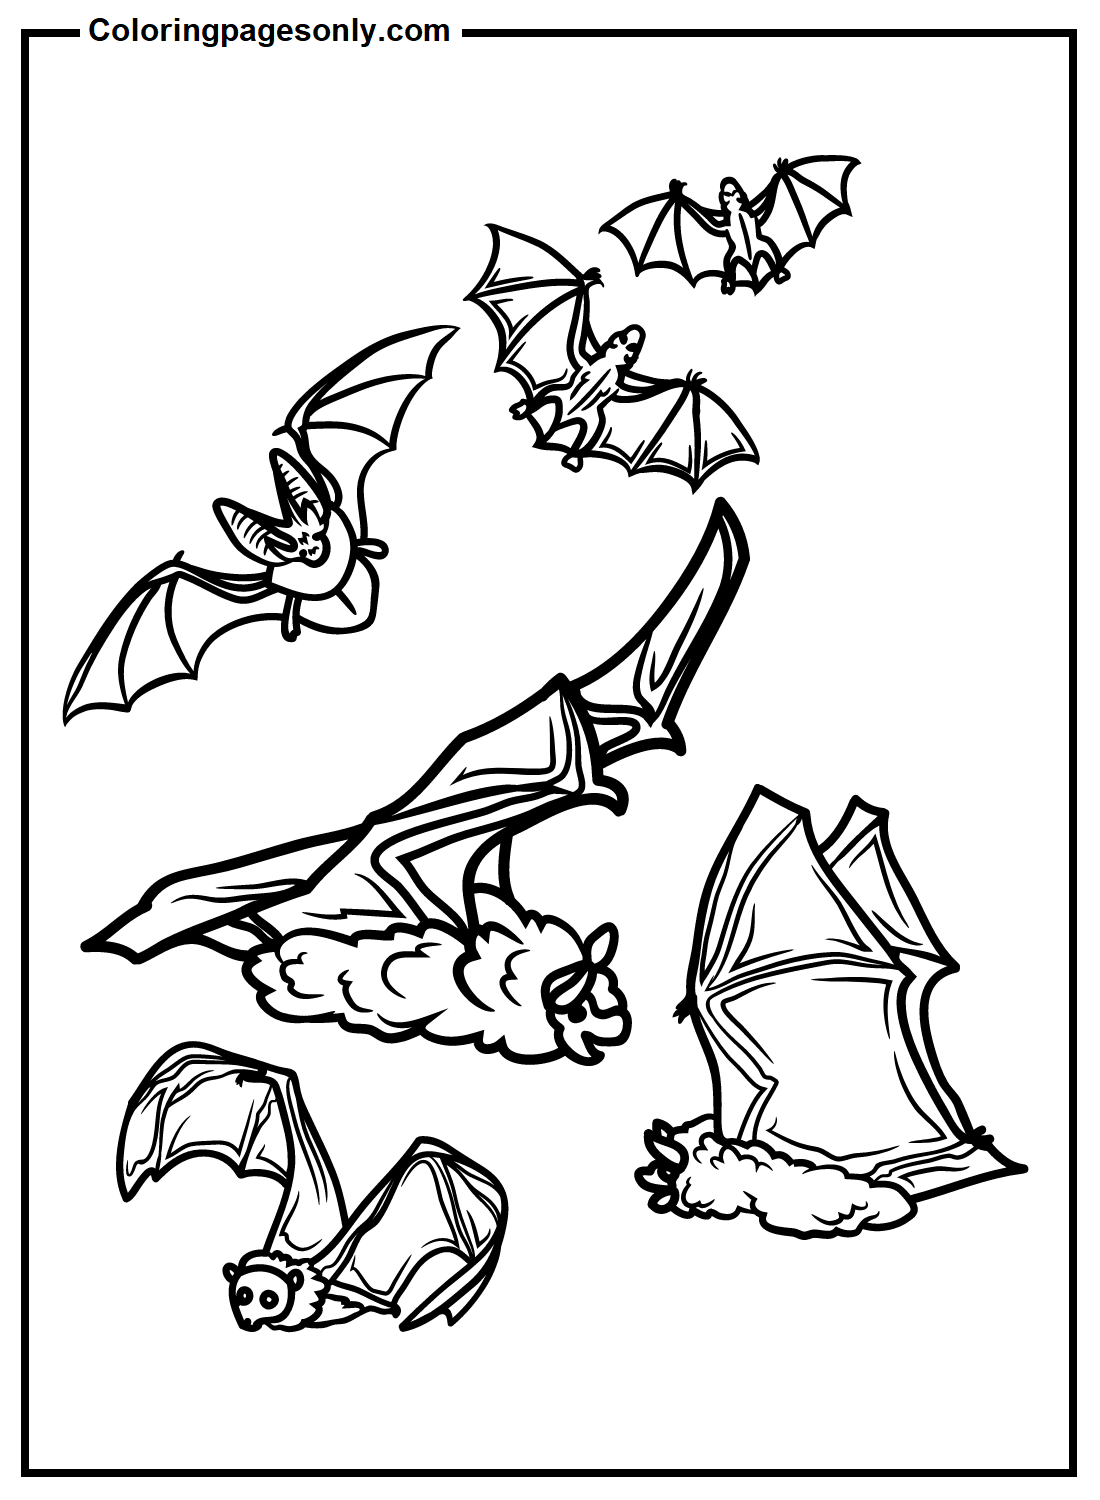 Bats Picture Coloring Page